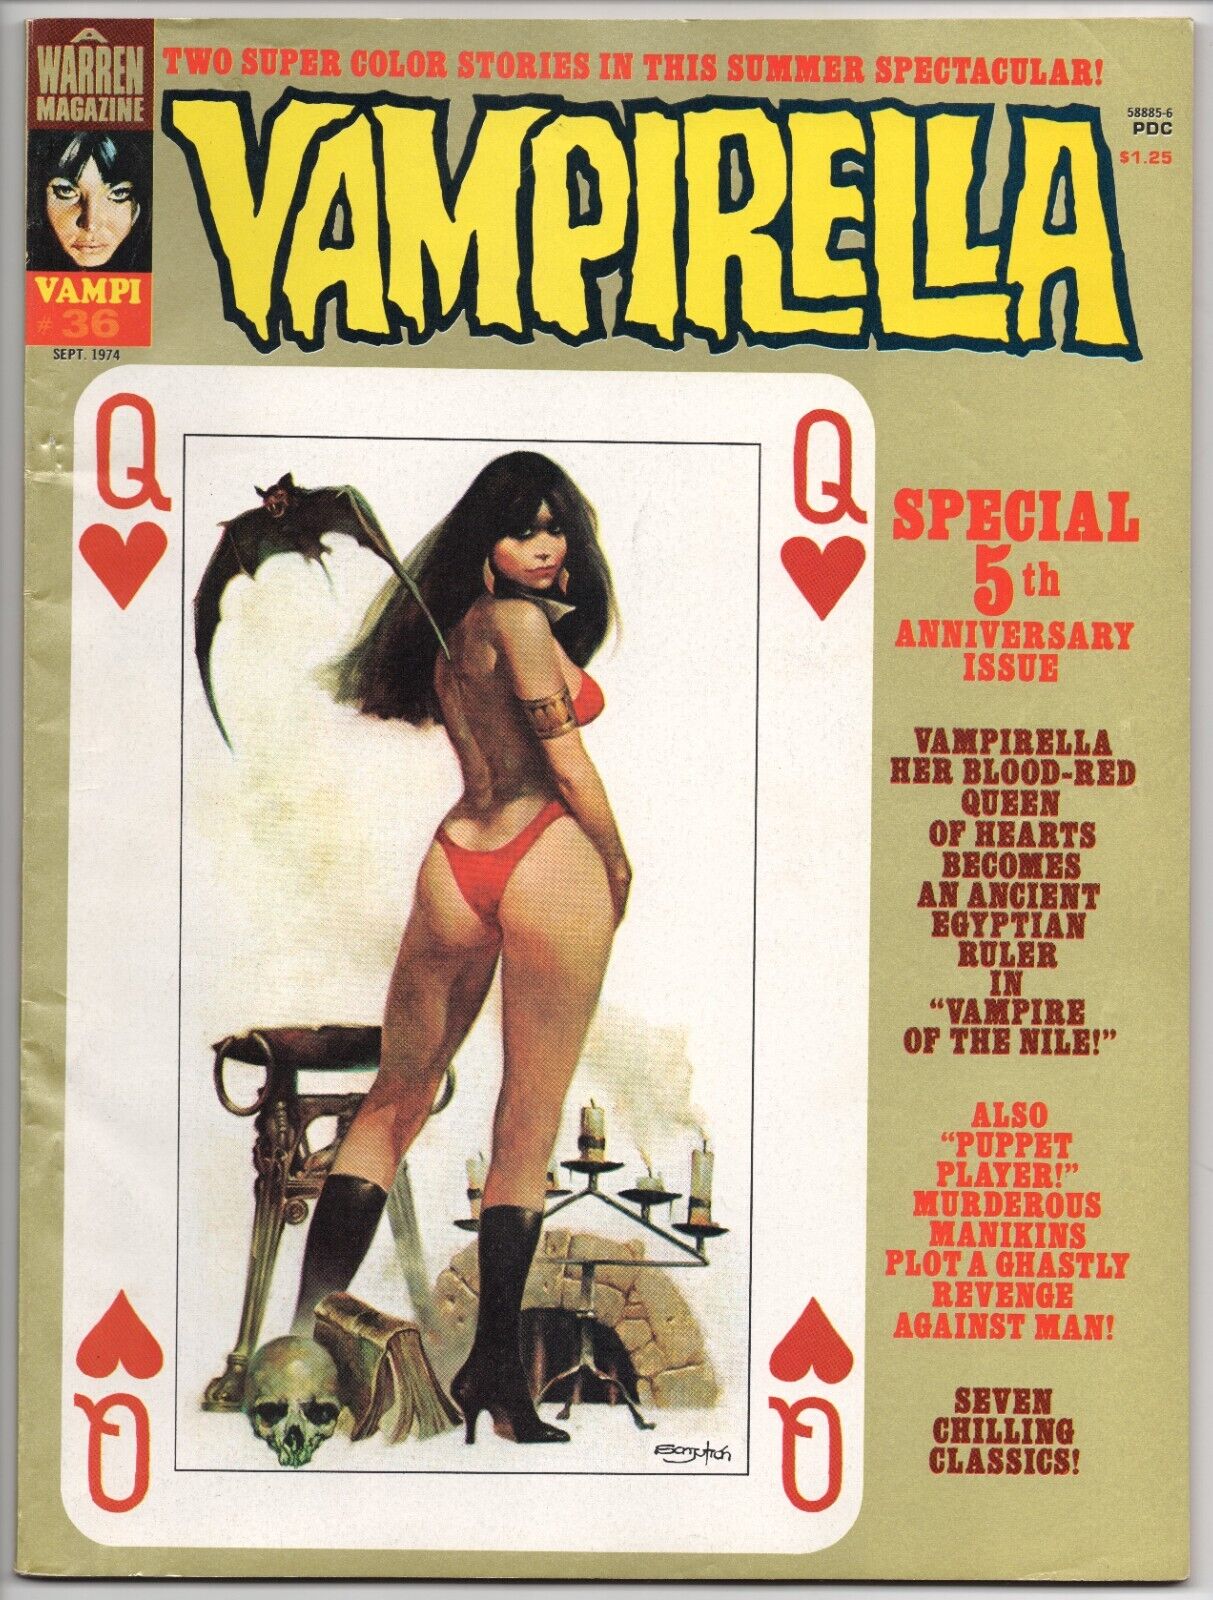 VAMPIRELLA #36 Sept 1974 comic US book WARREN magazine B&W+2 COLOR stories FN/VF